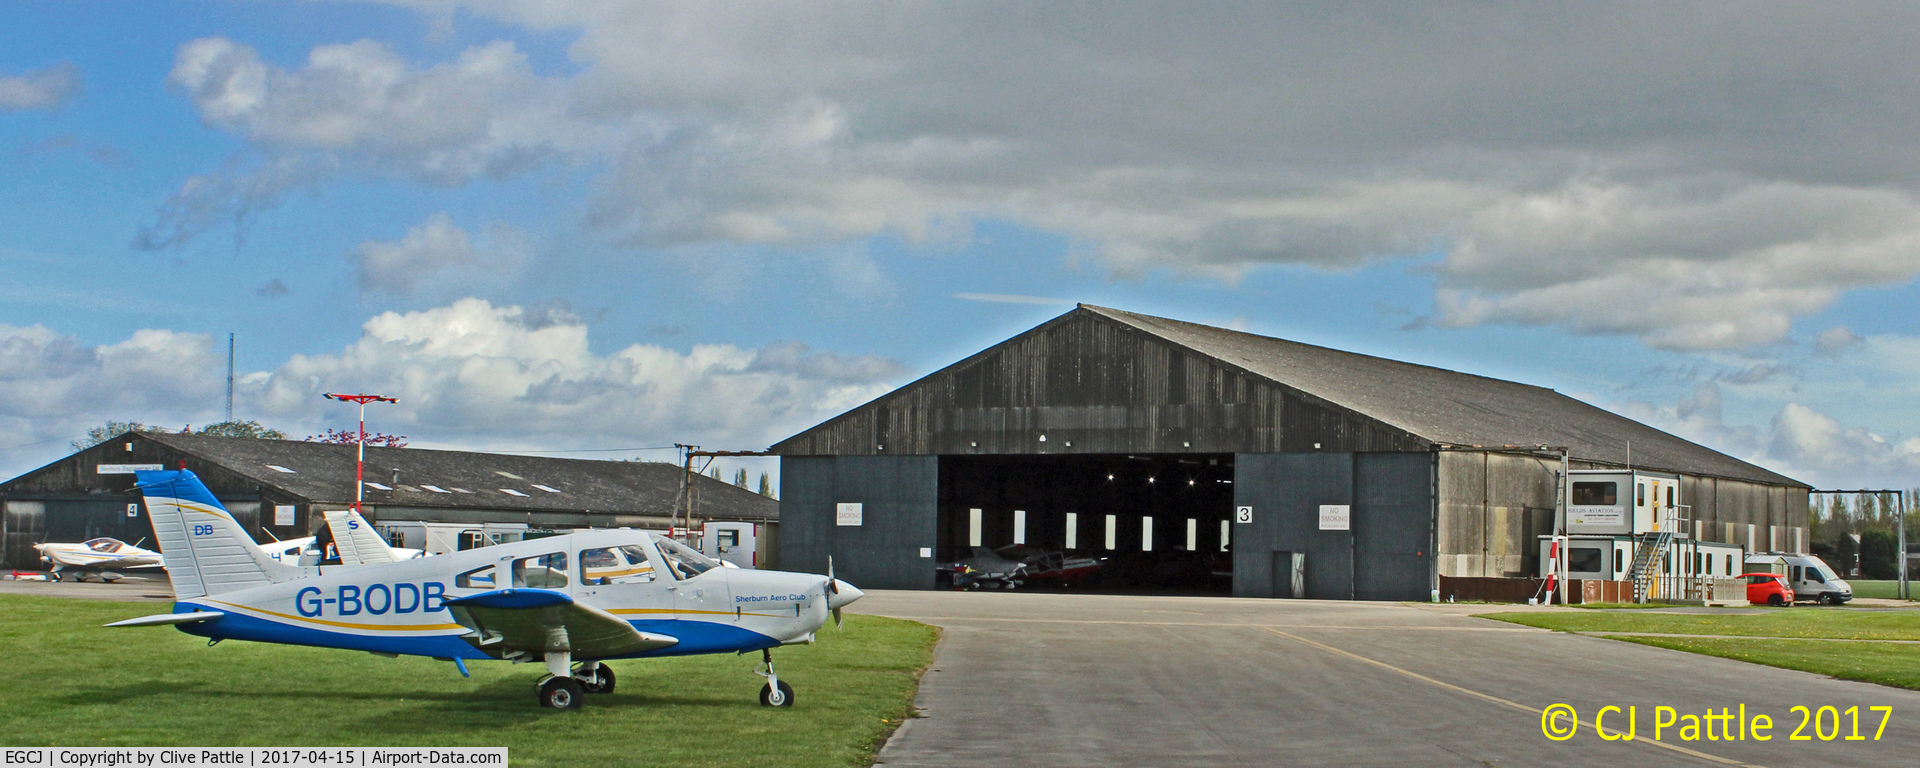 Sherburn-in-Elmet Airfield Airport, Sherburn-in-Elmet, England United Kingdom (EGCJ) - Airfield view at EGCJ